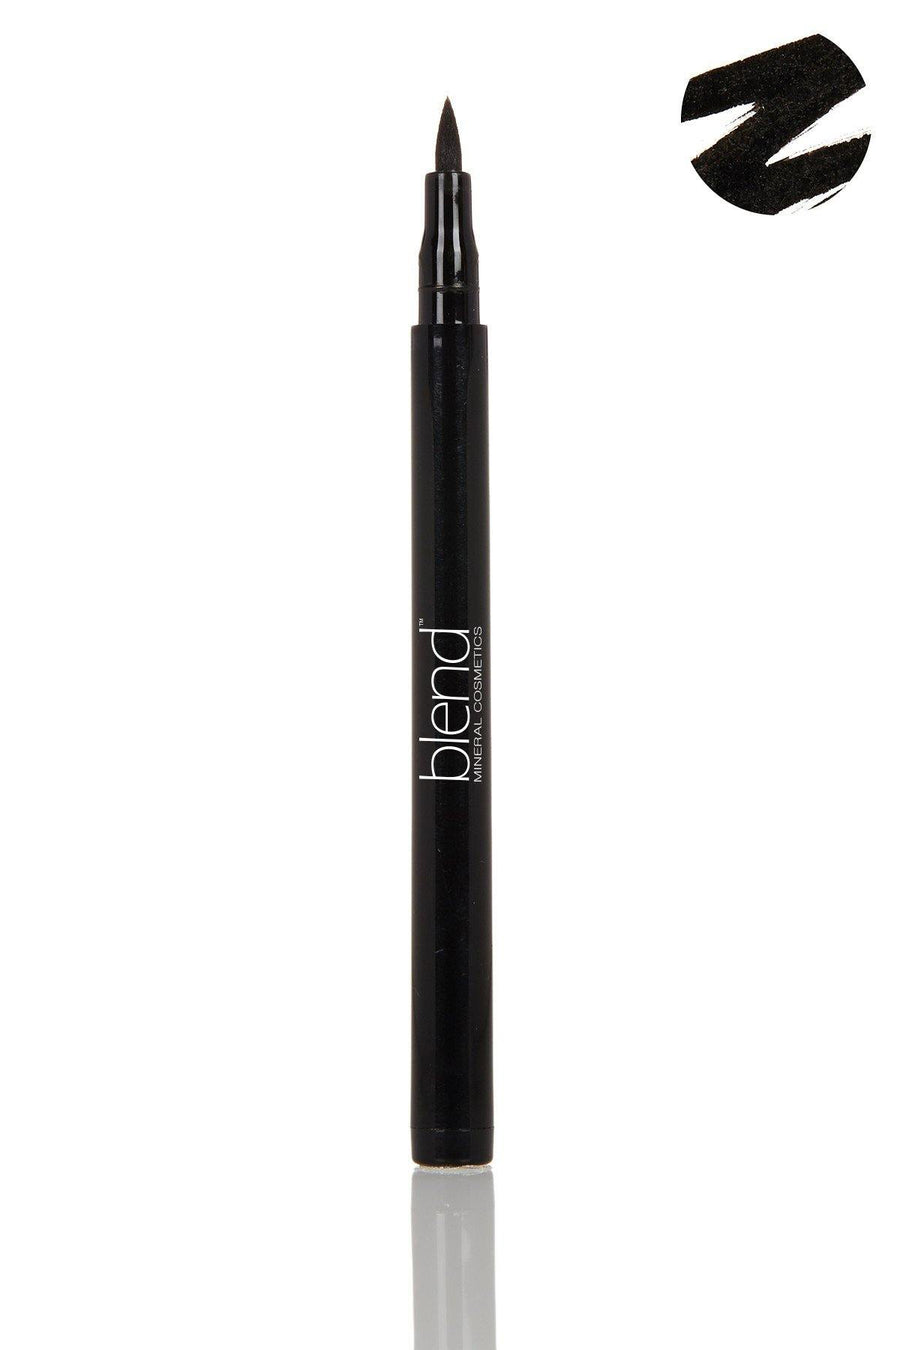  Chanel Eyeliner Pencil